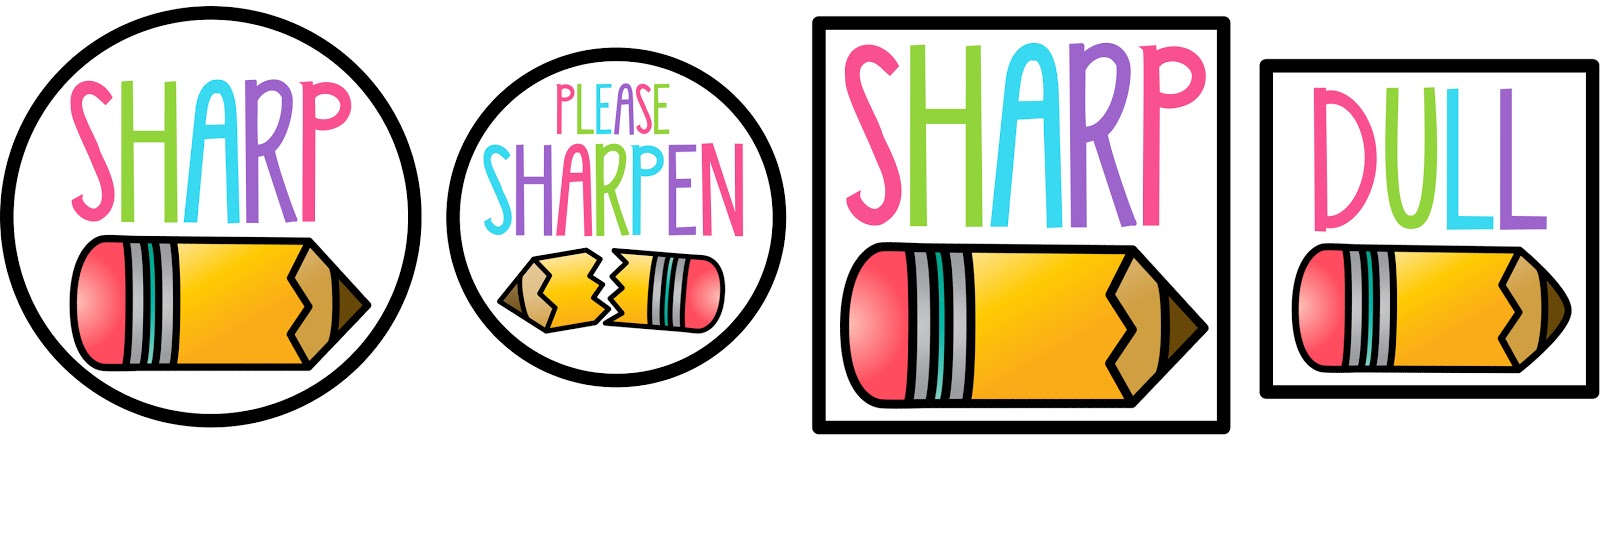 Free Sharper Pencil Cliparts, Download Free Clip Art, Free